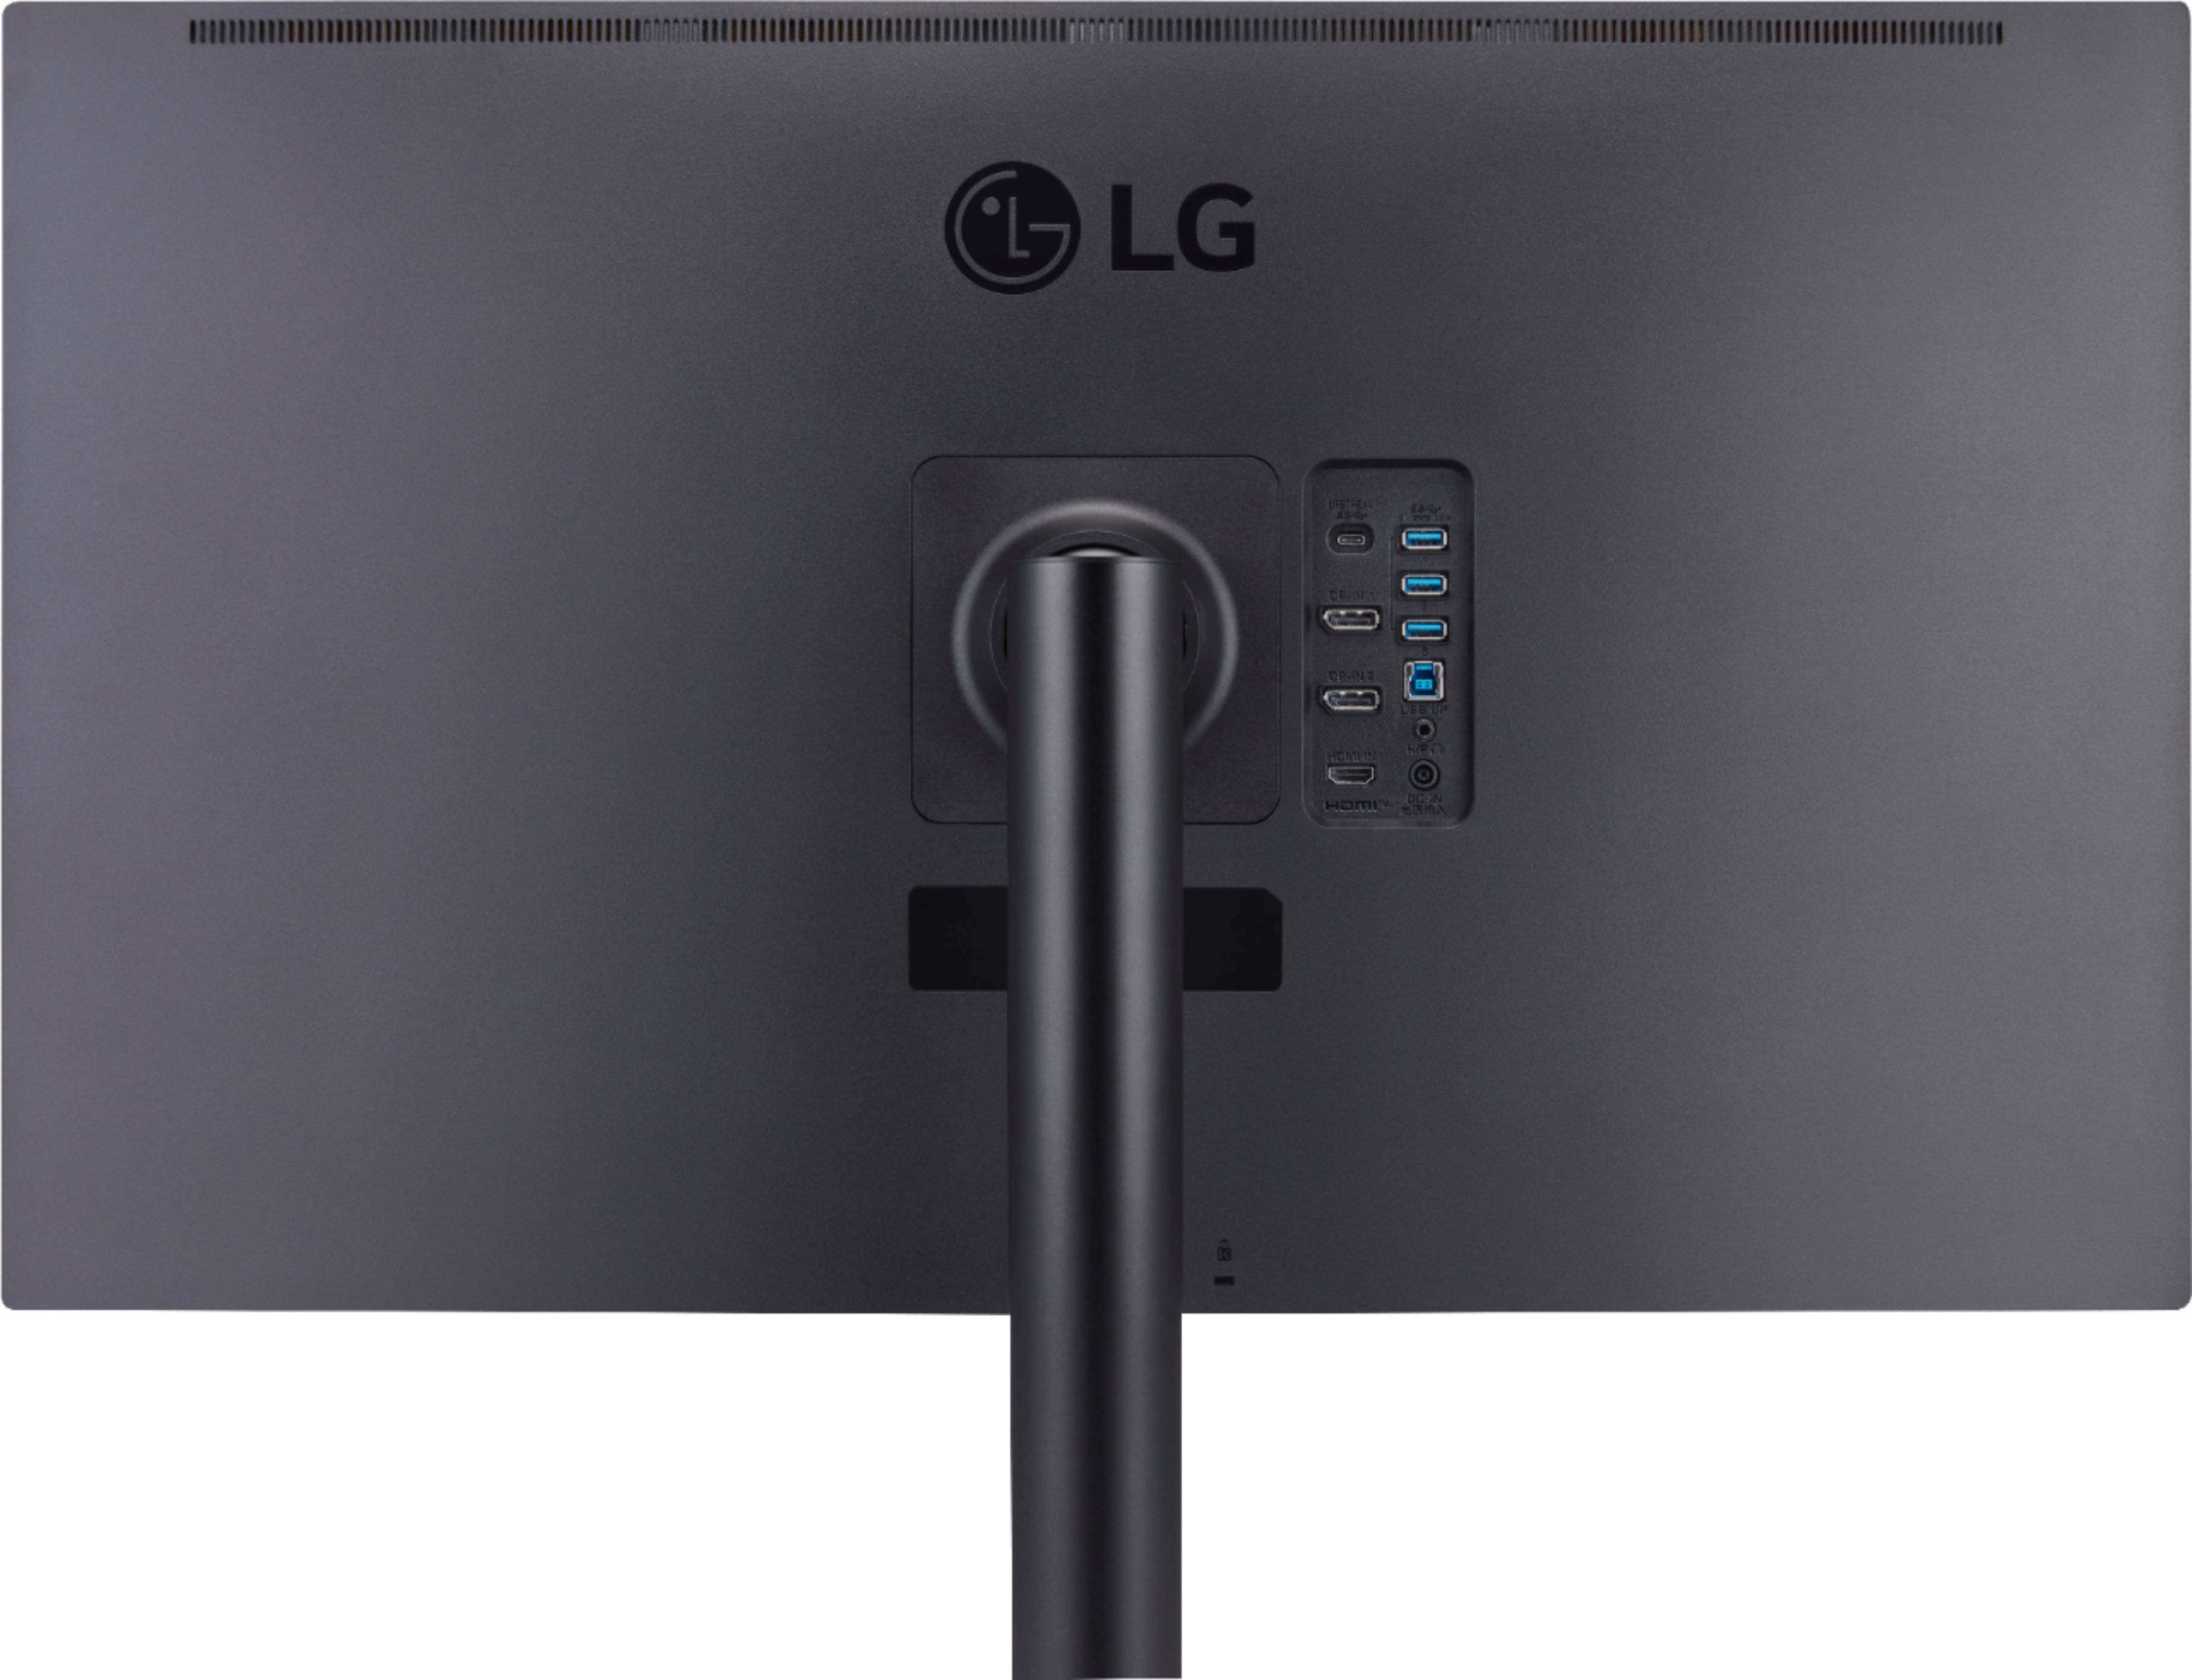 Back View: LG - Geek Squad Certified Refurbished 32" IPS LED 4K UHD Monitor with HDR (HDMI, DisplayPort) - Black